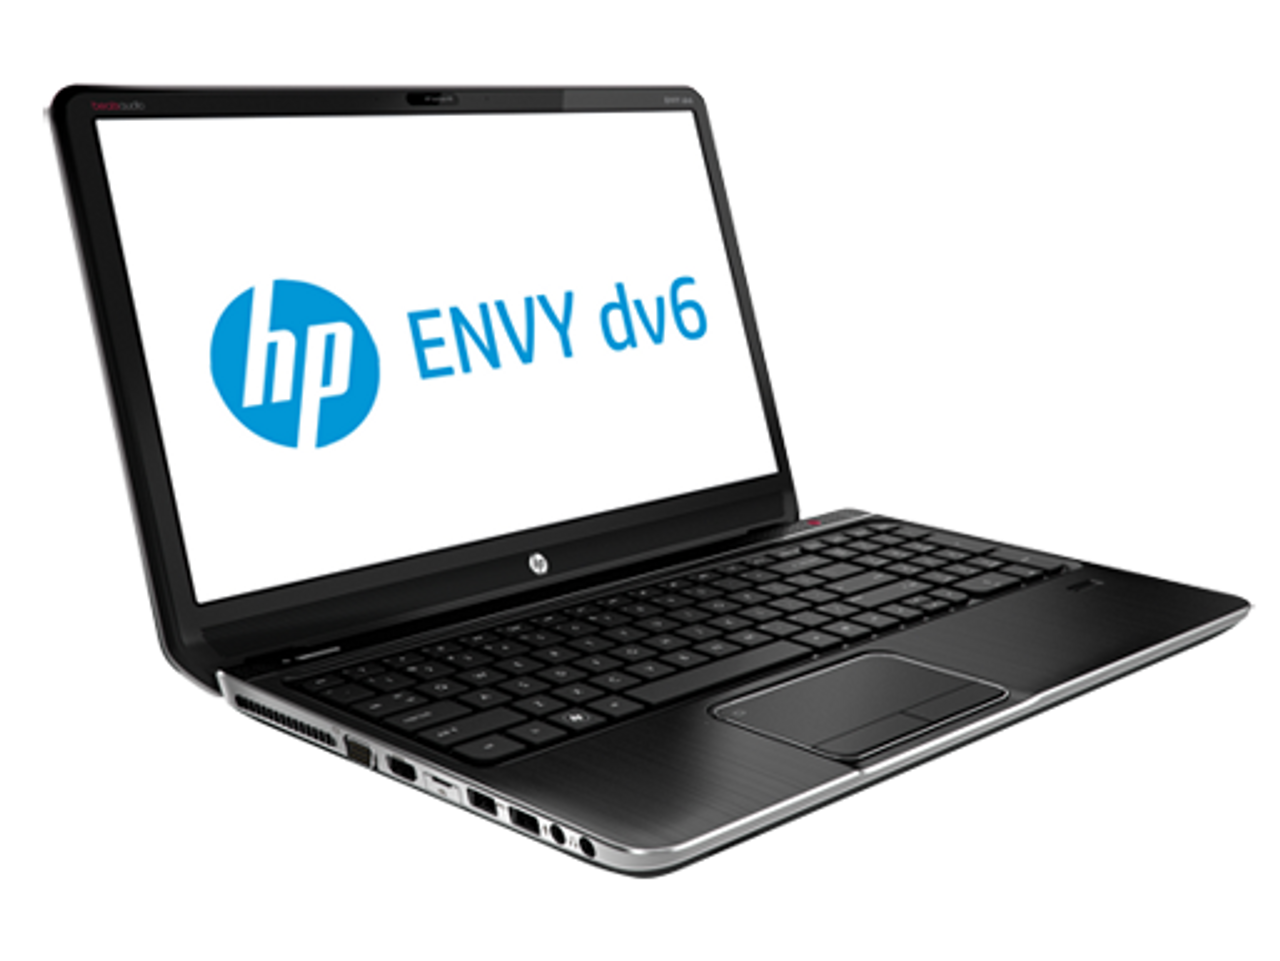 HP Laptop Envy dv6 Intel Core i5 (3rd Gen) @ 2.50Ghz 15.6